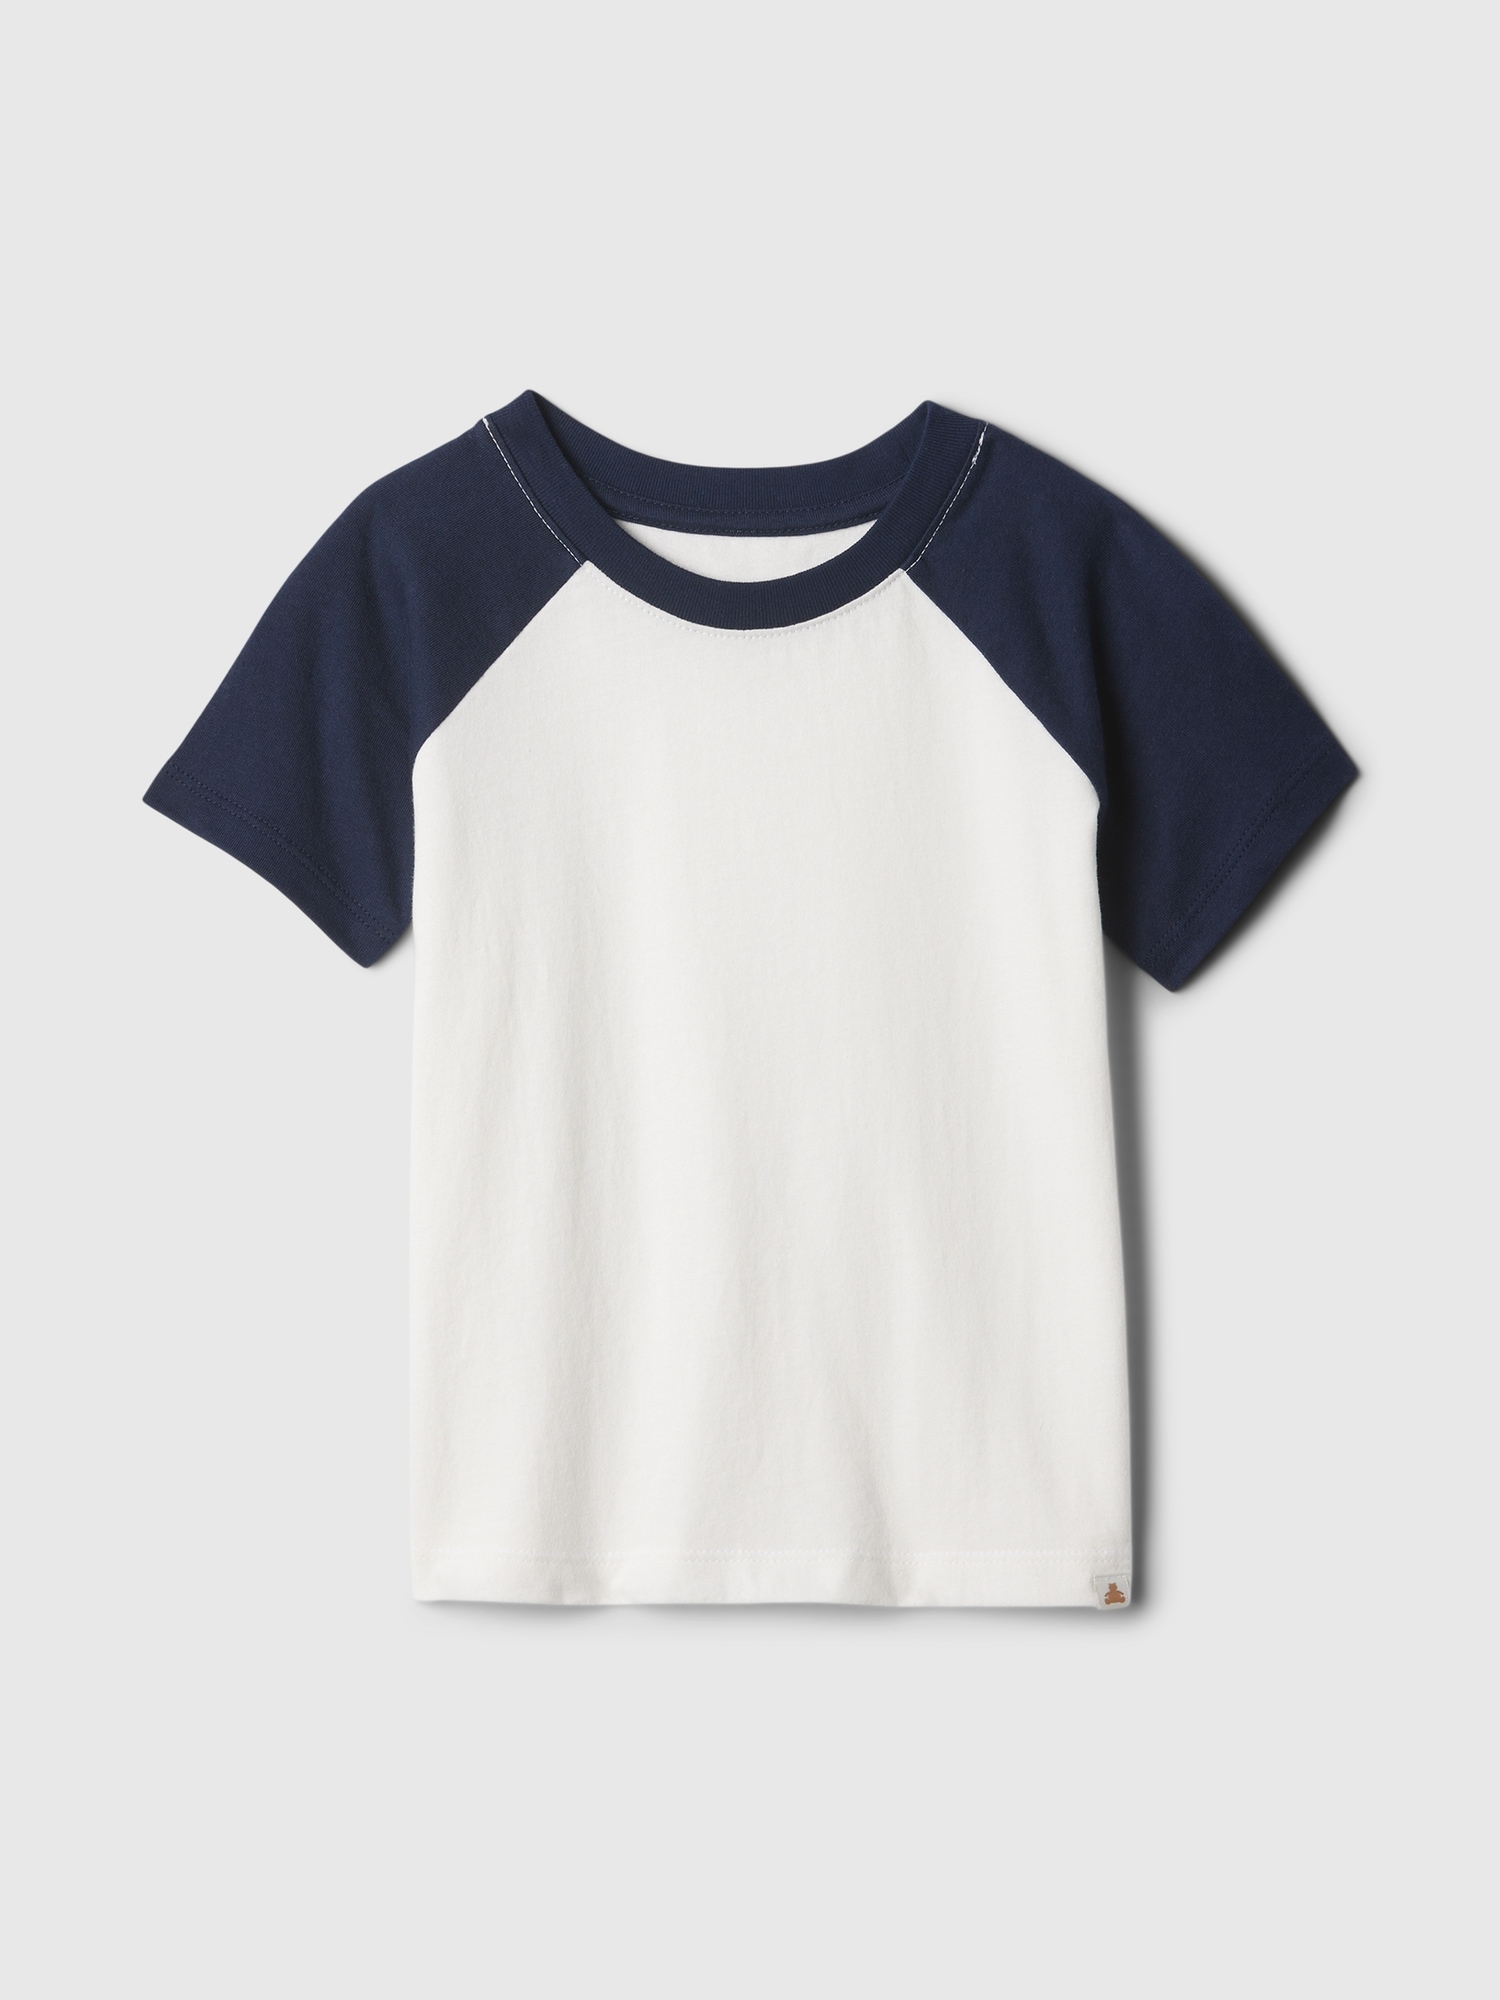 babyGap Mix and Match Raglan T-Shirt